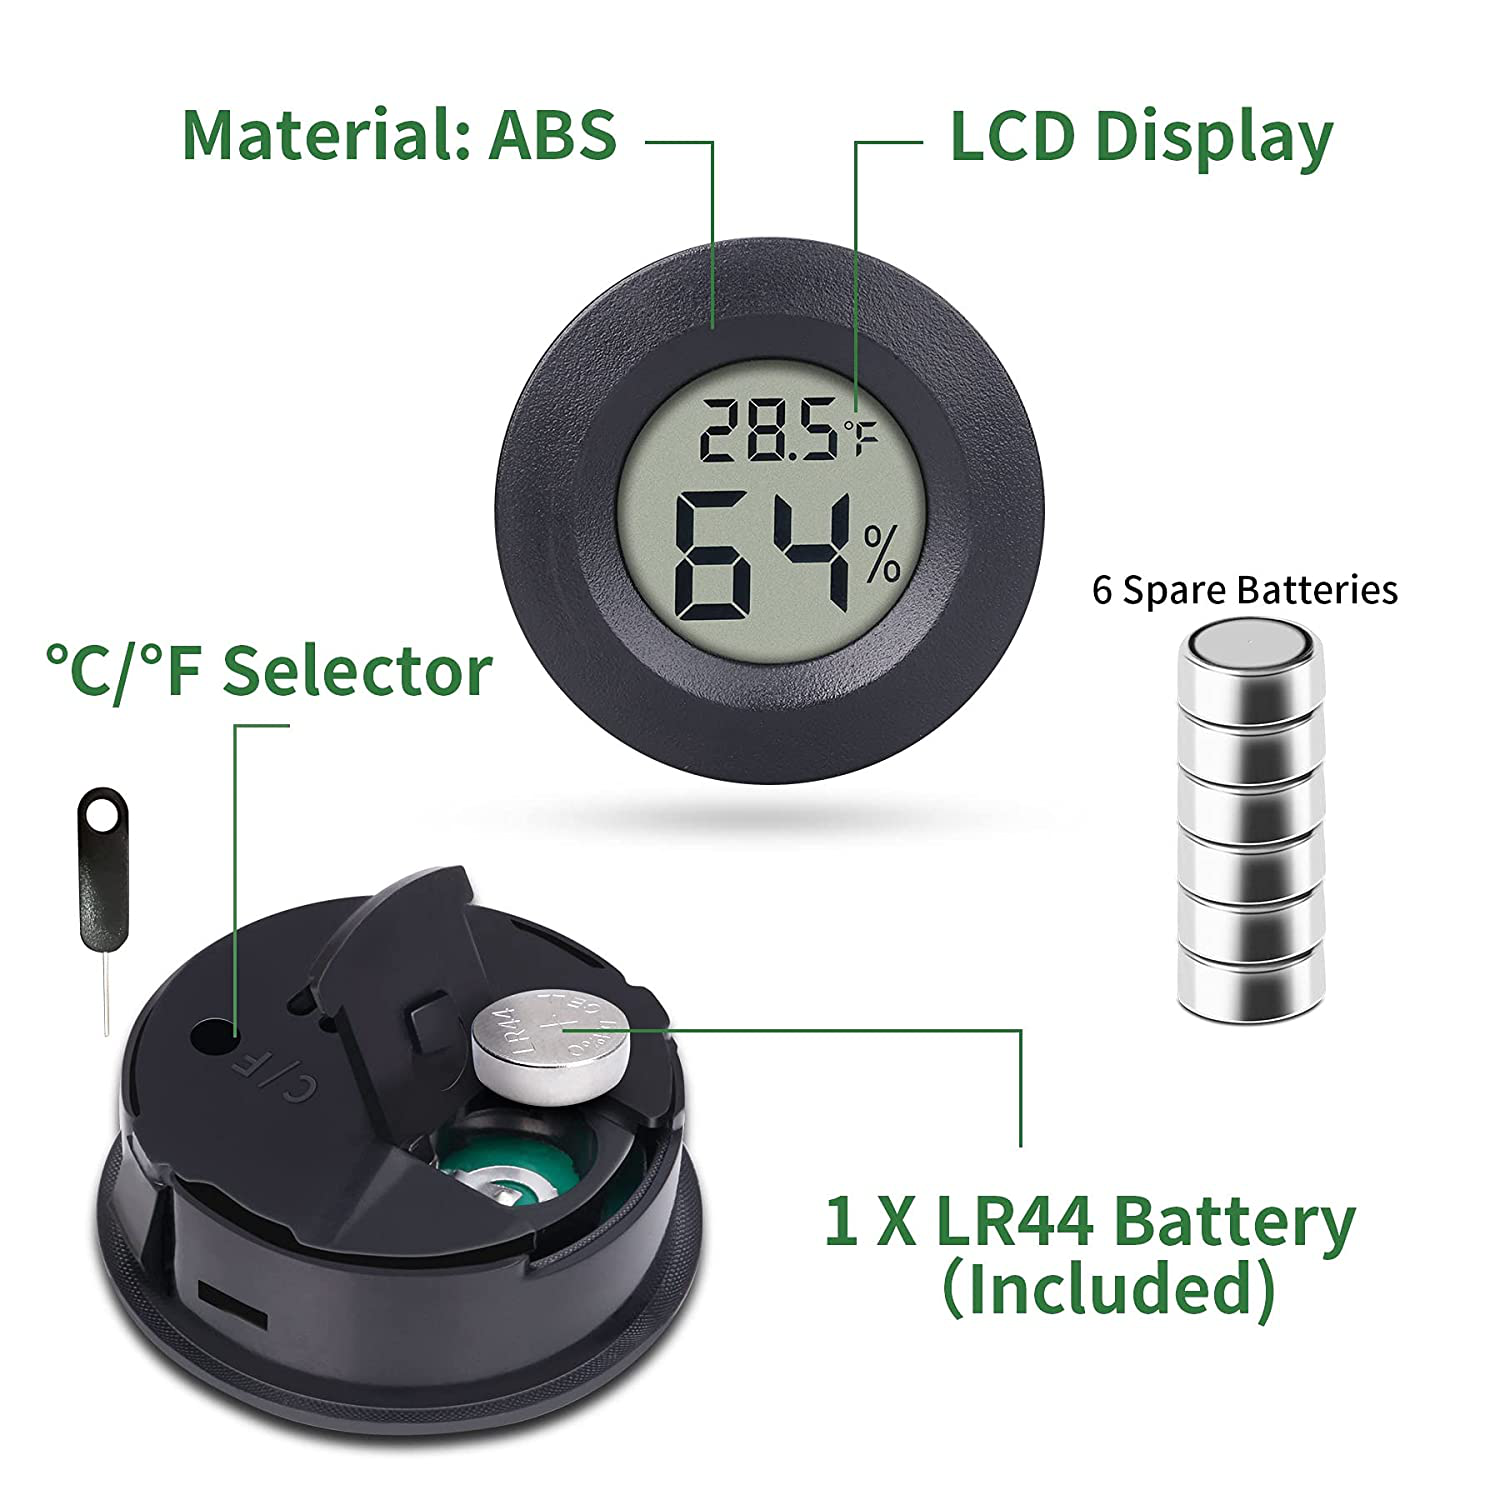 Goabroa Mini Hygrometer Thermometer Digital Indoor Humidity Gauge Monitor with Temperature Meter Sensor Fahrenheit ()